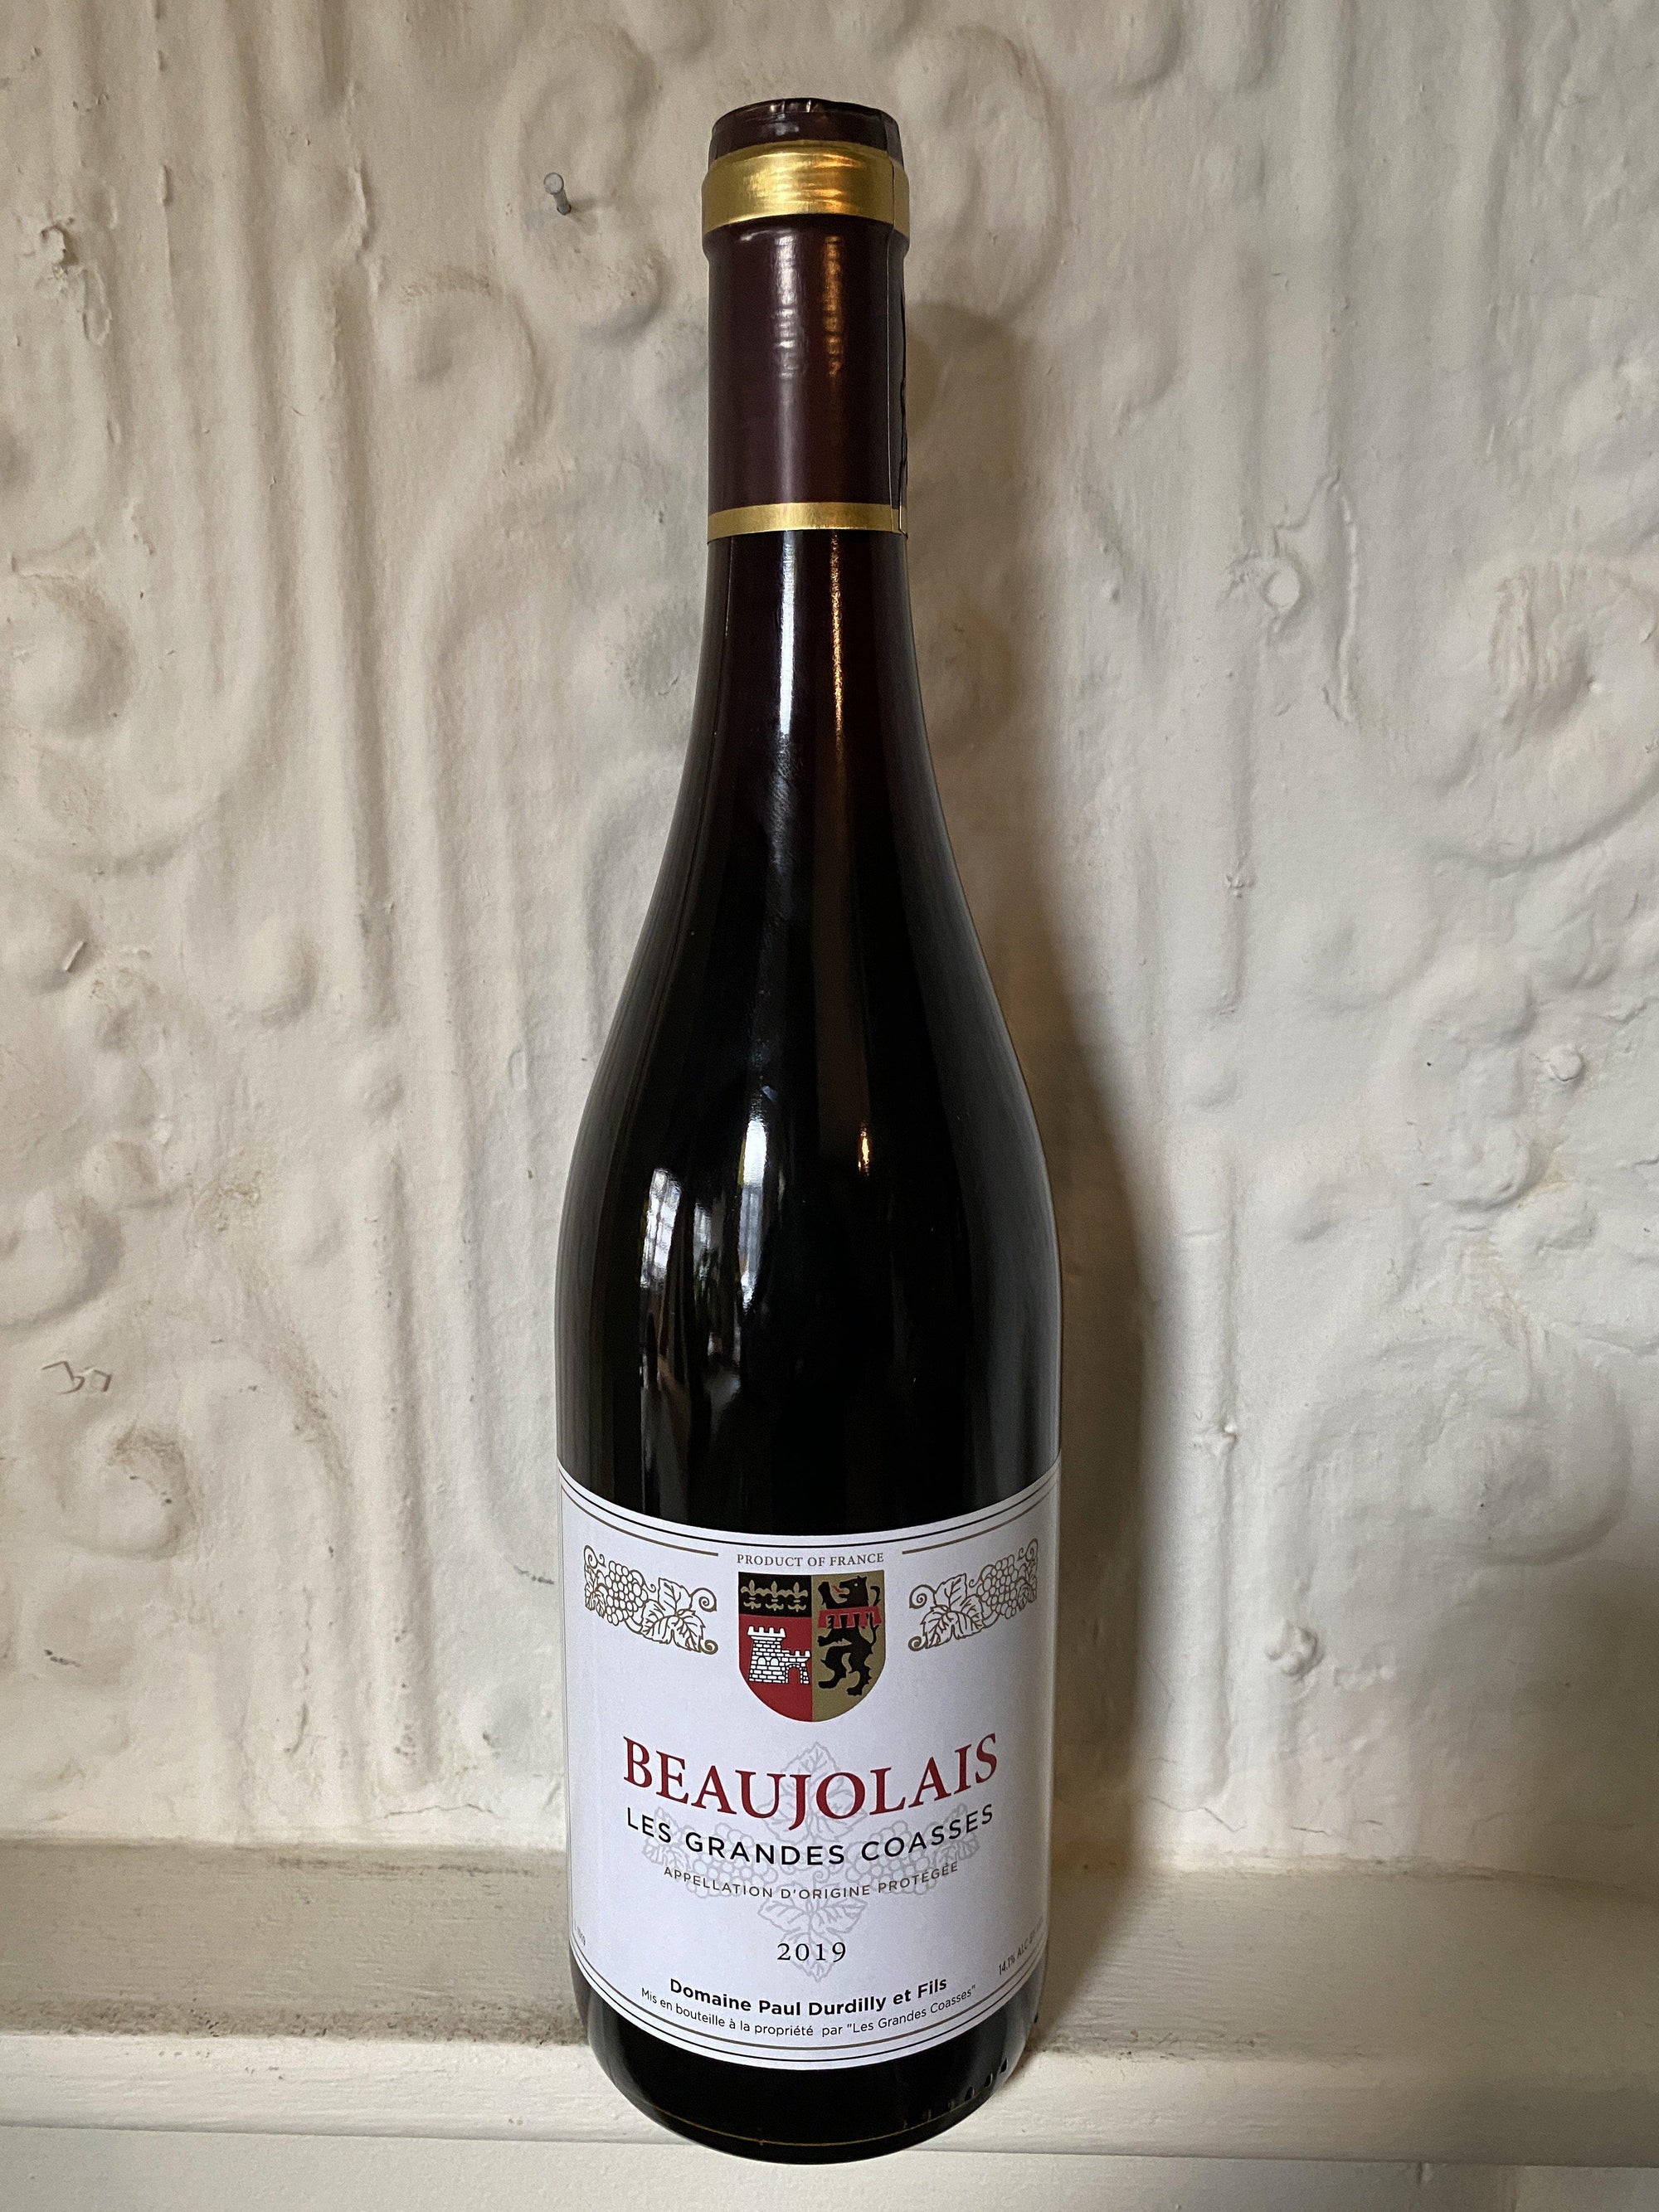 Les Grandes Coasses, Domaine Paul Durdilly 2019 (Beaujolais, France)-Wine-Bibber & Bell